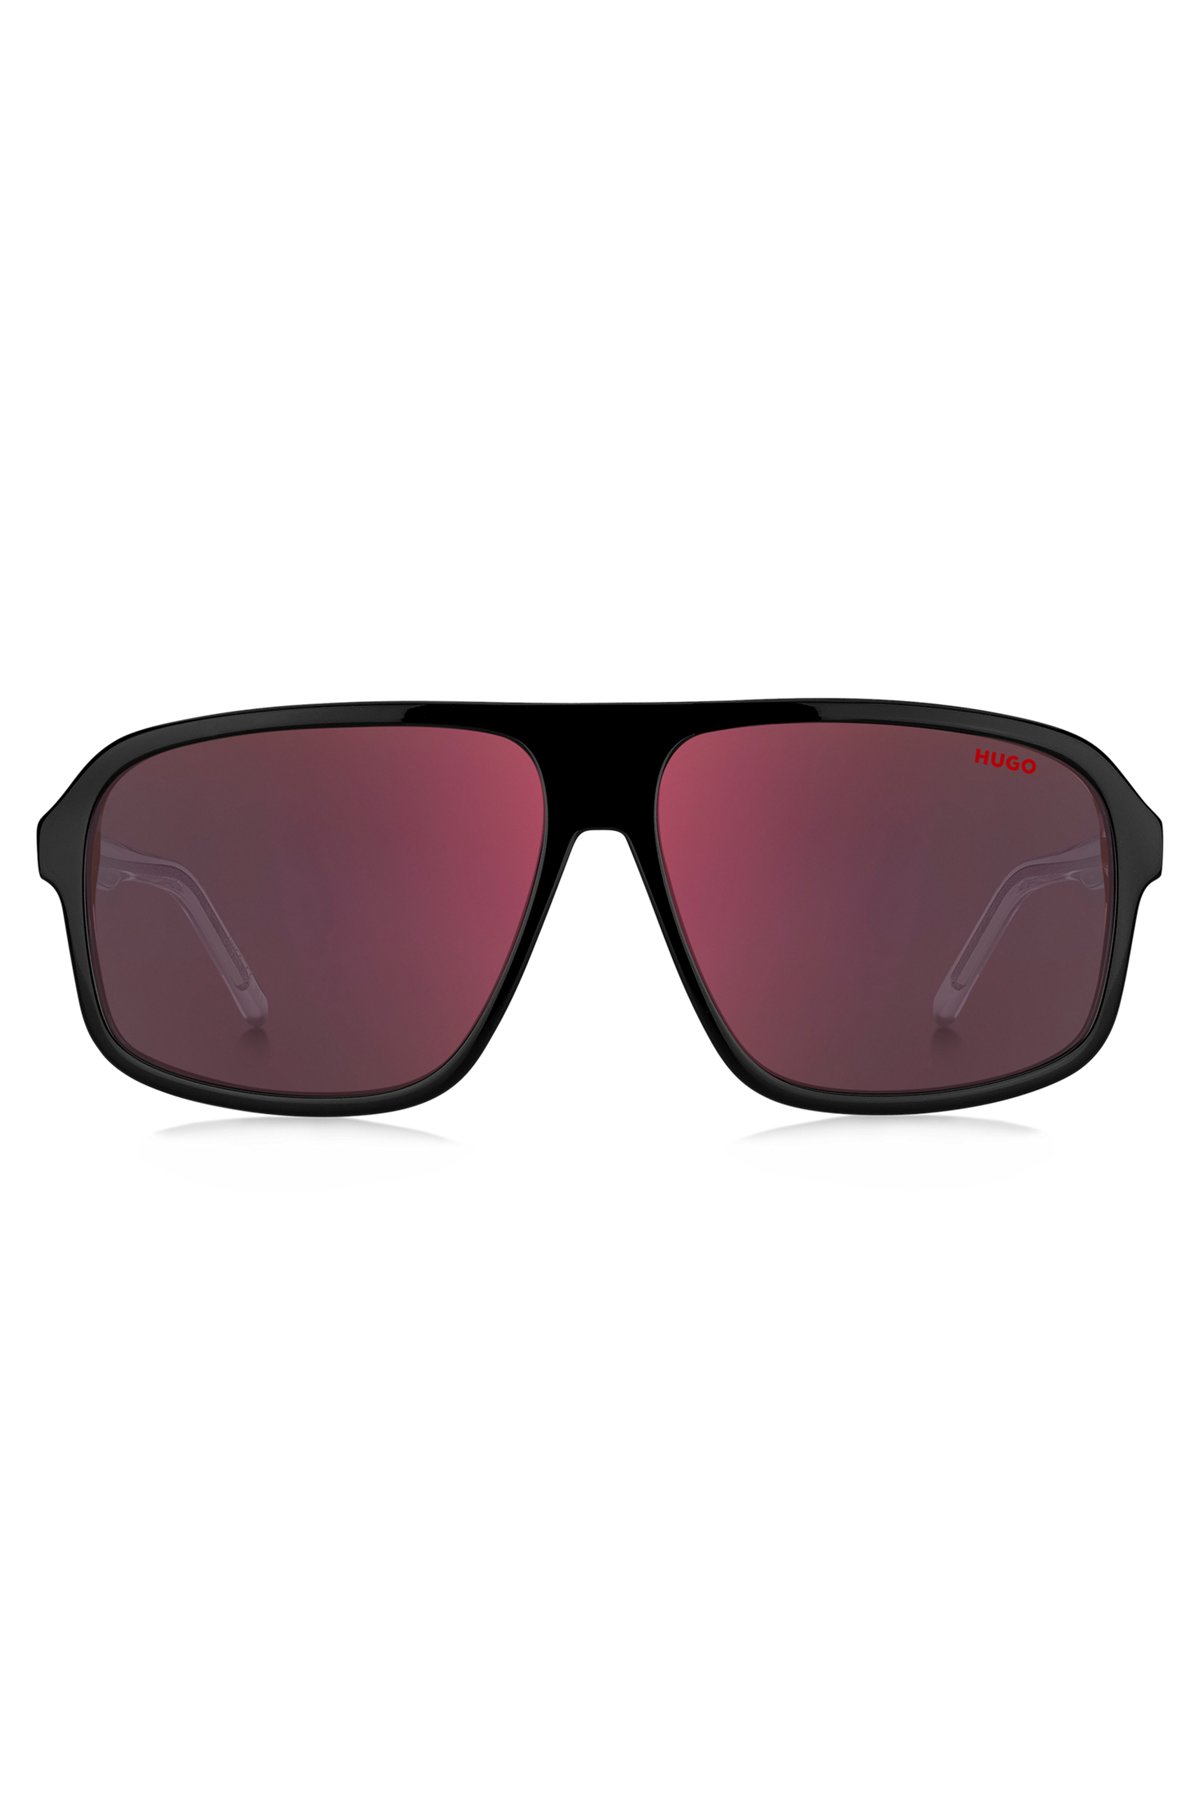 Transparent-temple sunglasses with black-acetate frames, Black